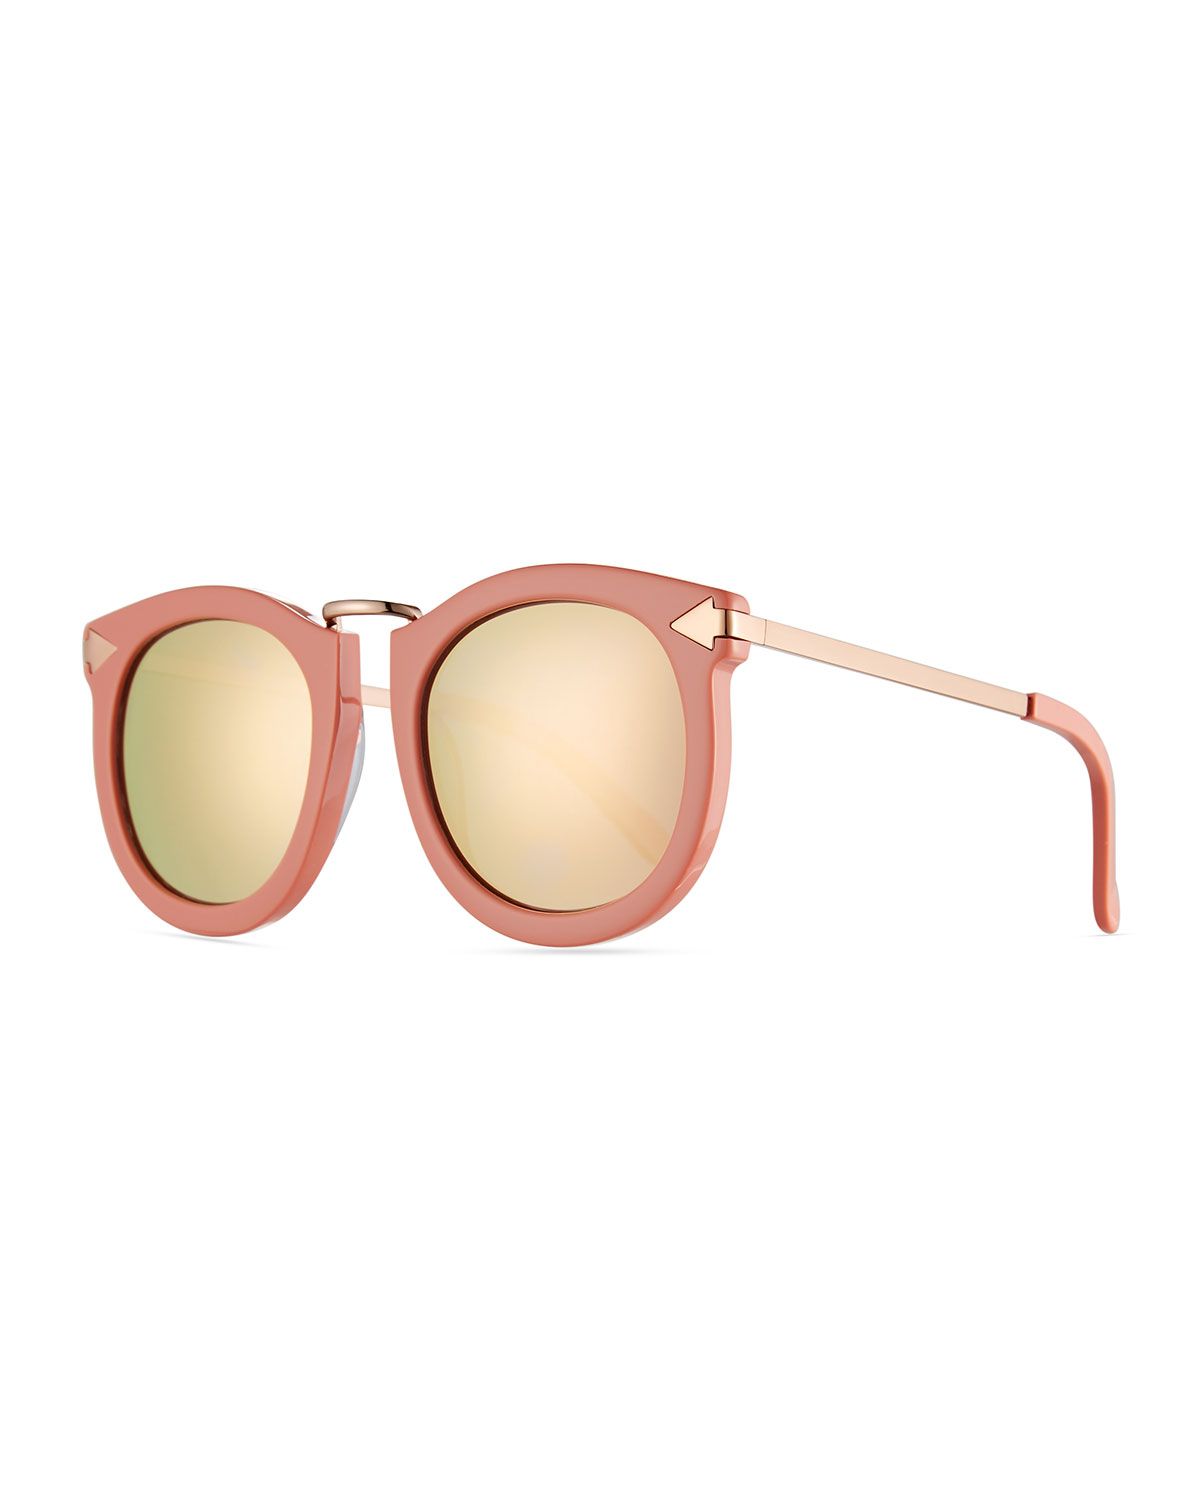 Super Lunar Round Monochromatic Sunglasses, Pink | Neiman Marcus